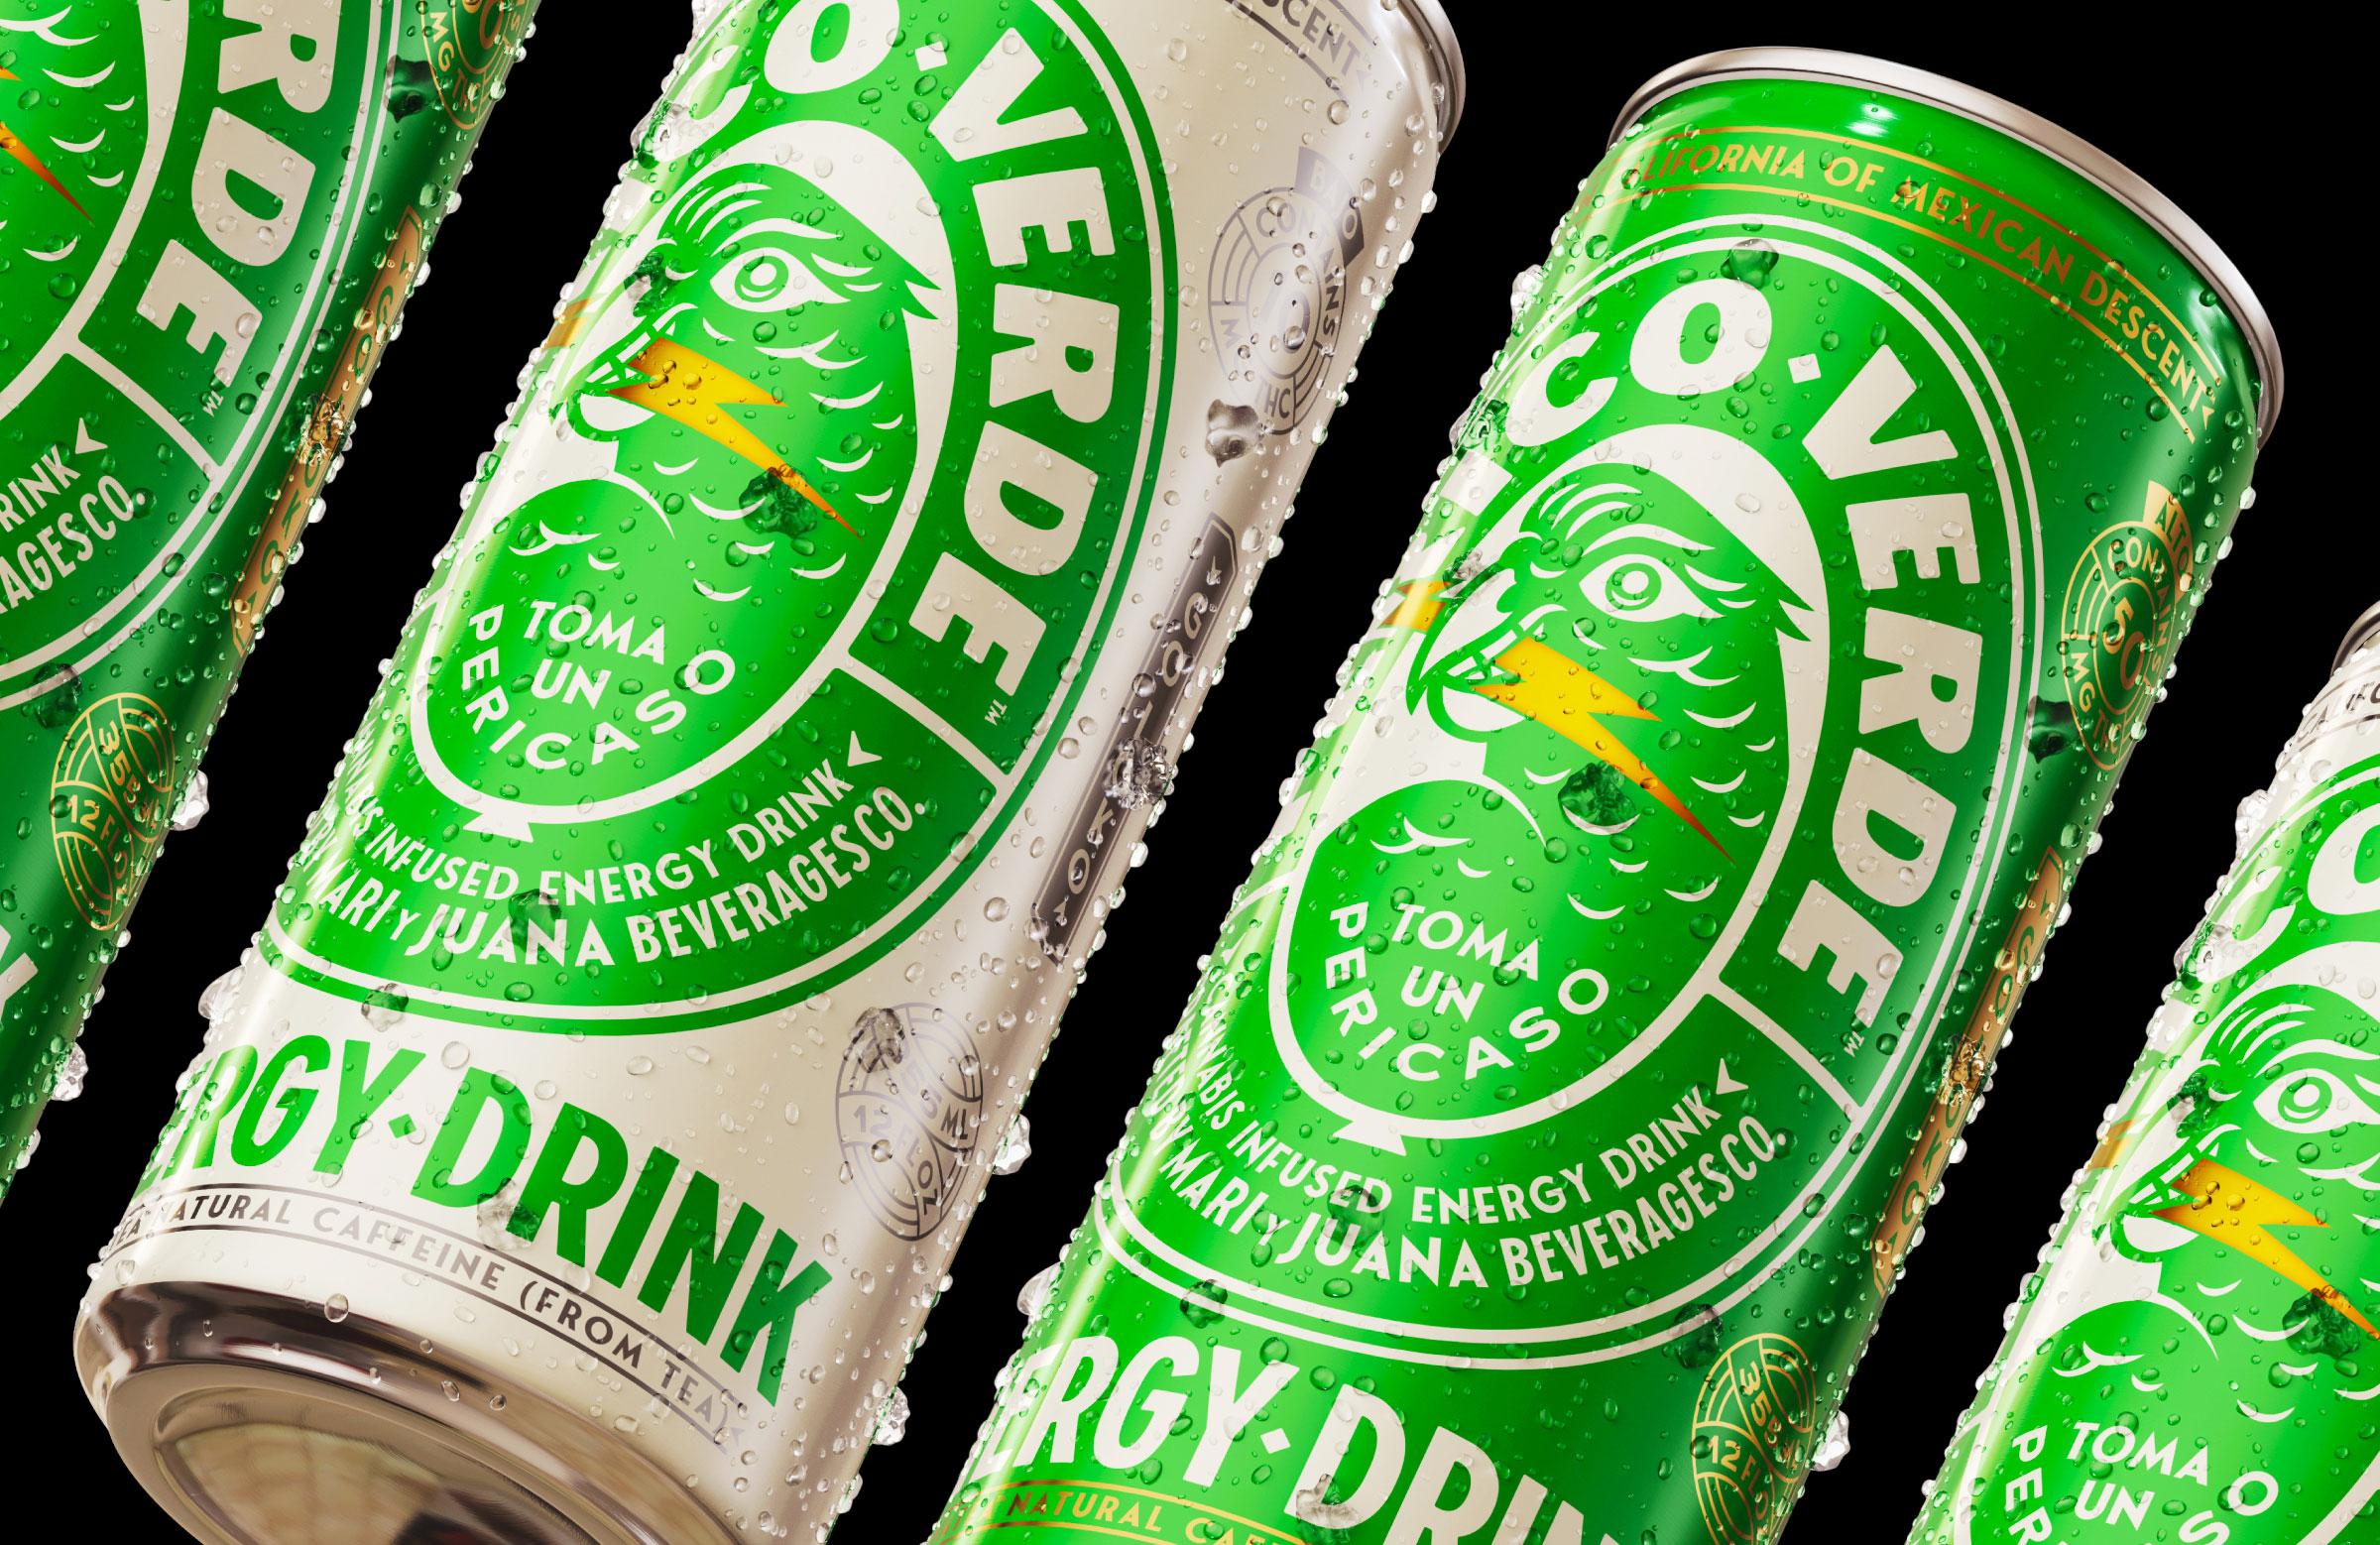 Perico Verde Energy Drink Branding and Packaging Design by Jacomy Mayne Studio